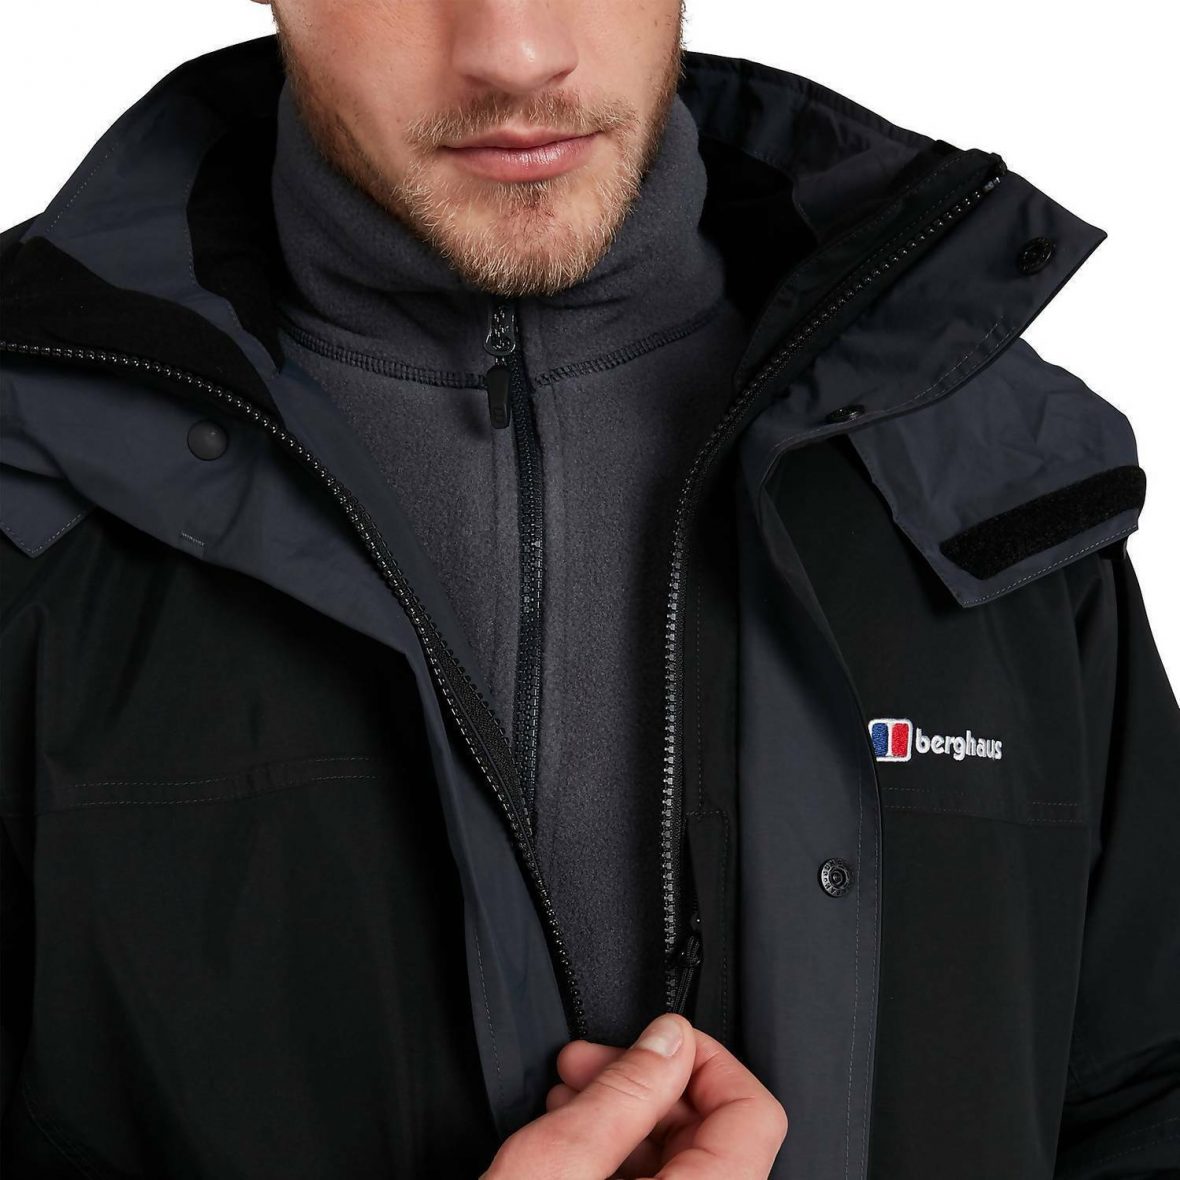 Berghaus 421016bp6 Men’s Cornice InterActive Jacket – Black j